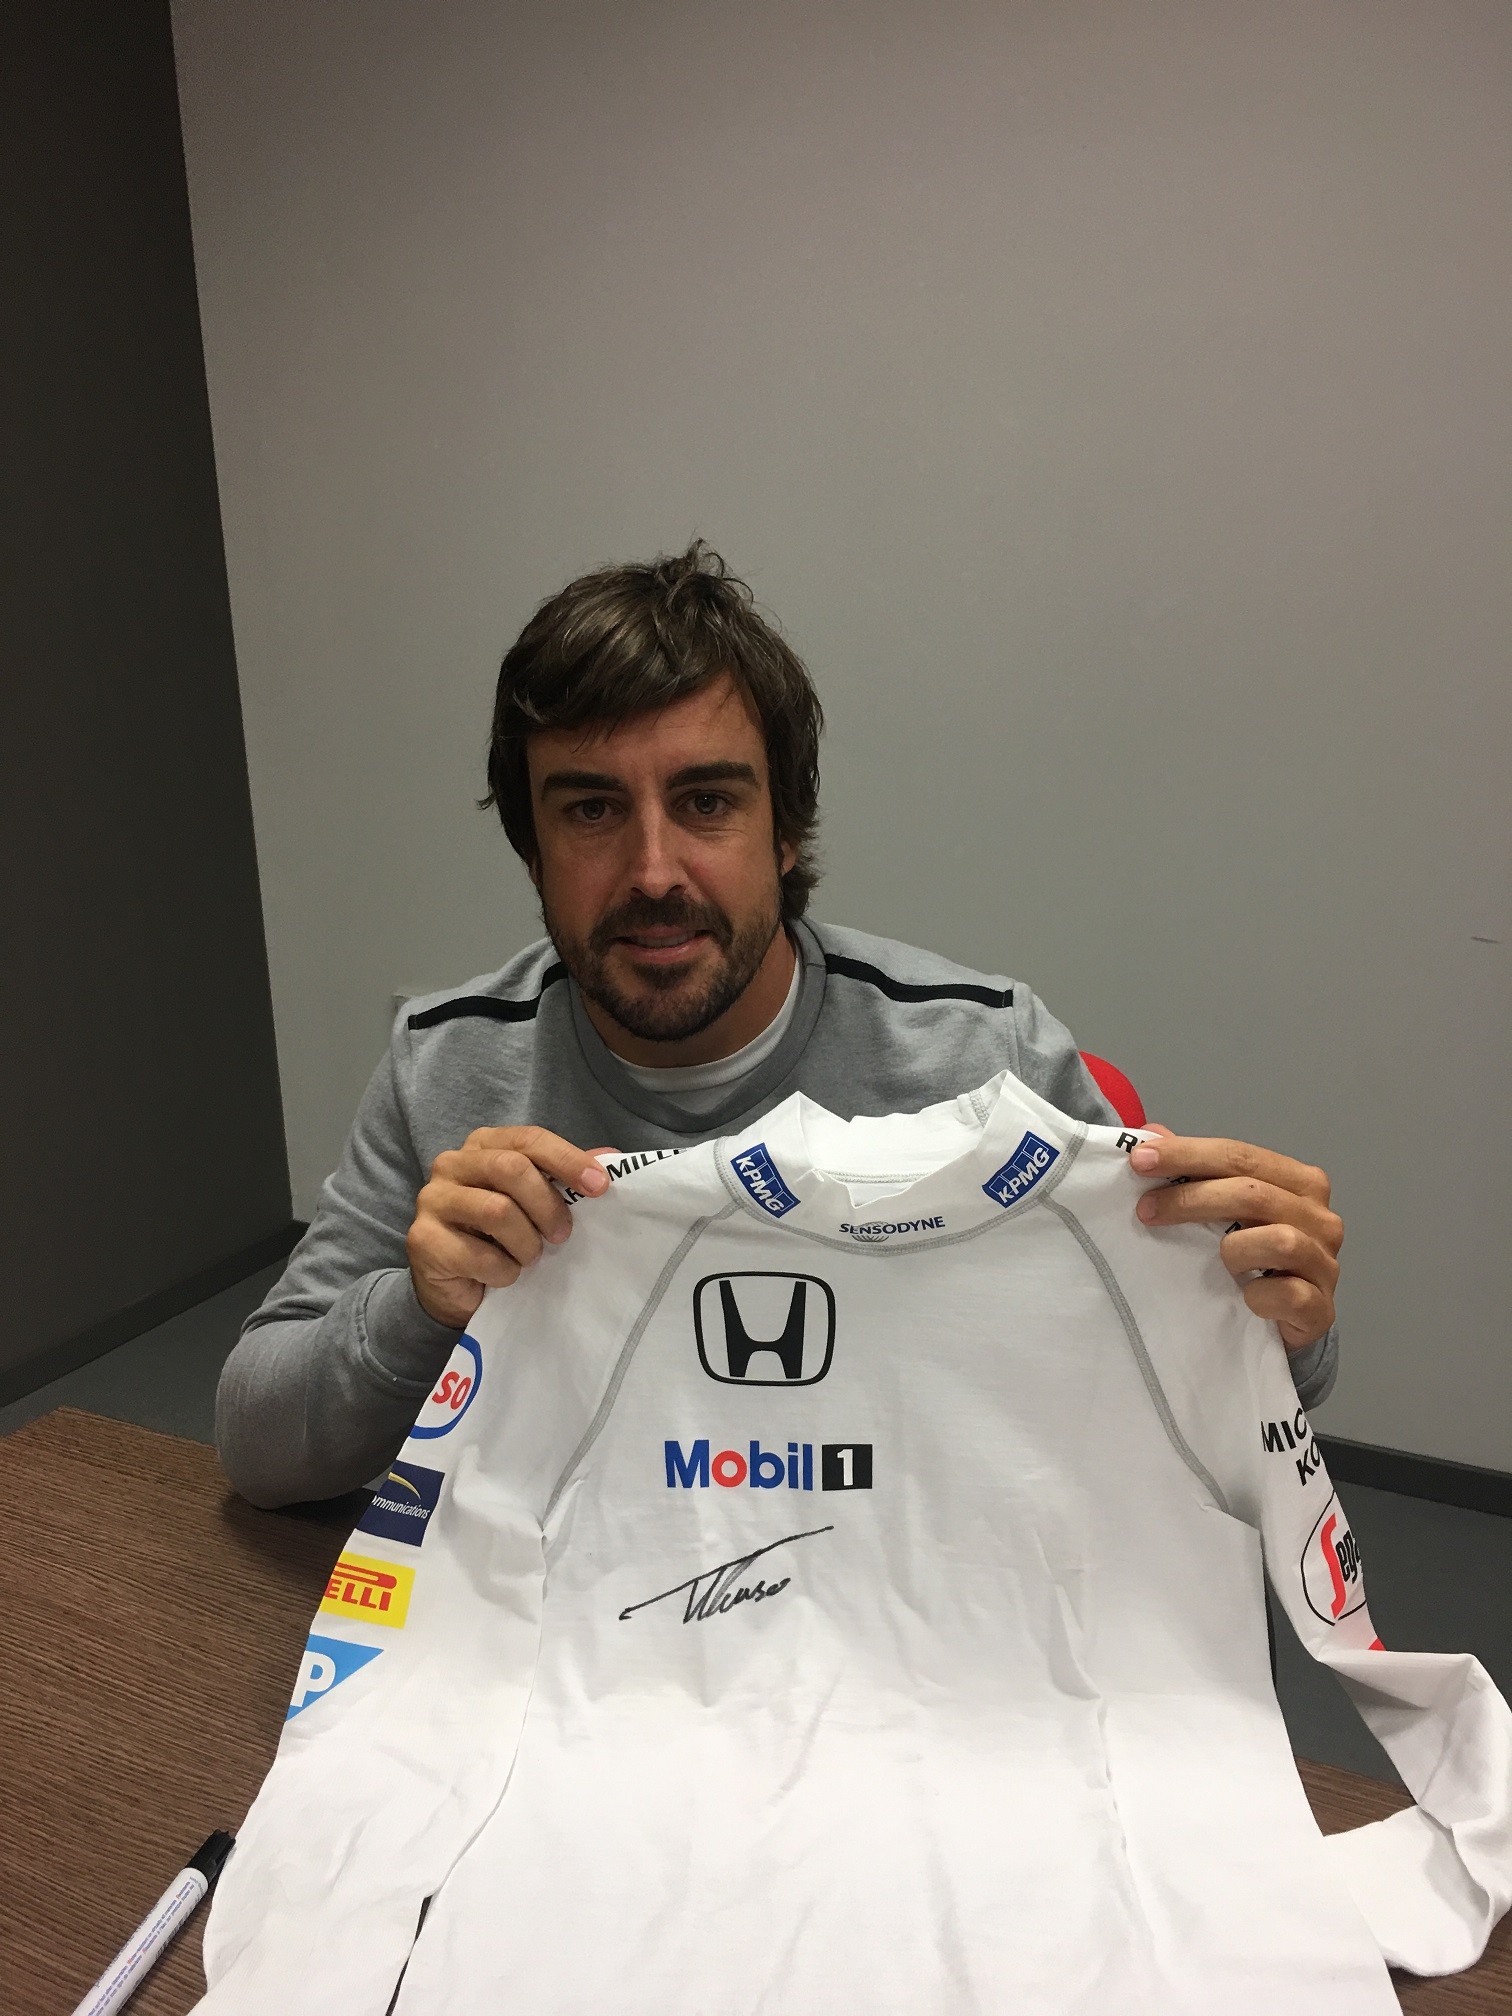 Camiseta Nomex McLaren Honda 2015 Fernando Alonso - Museo y Circuito Fernando  Alonso